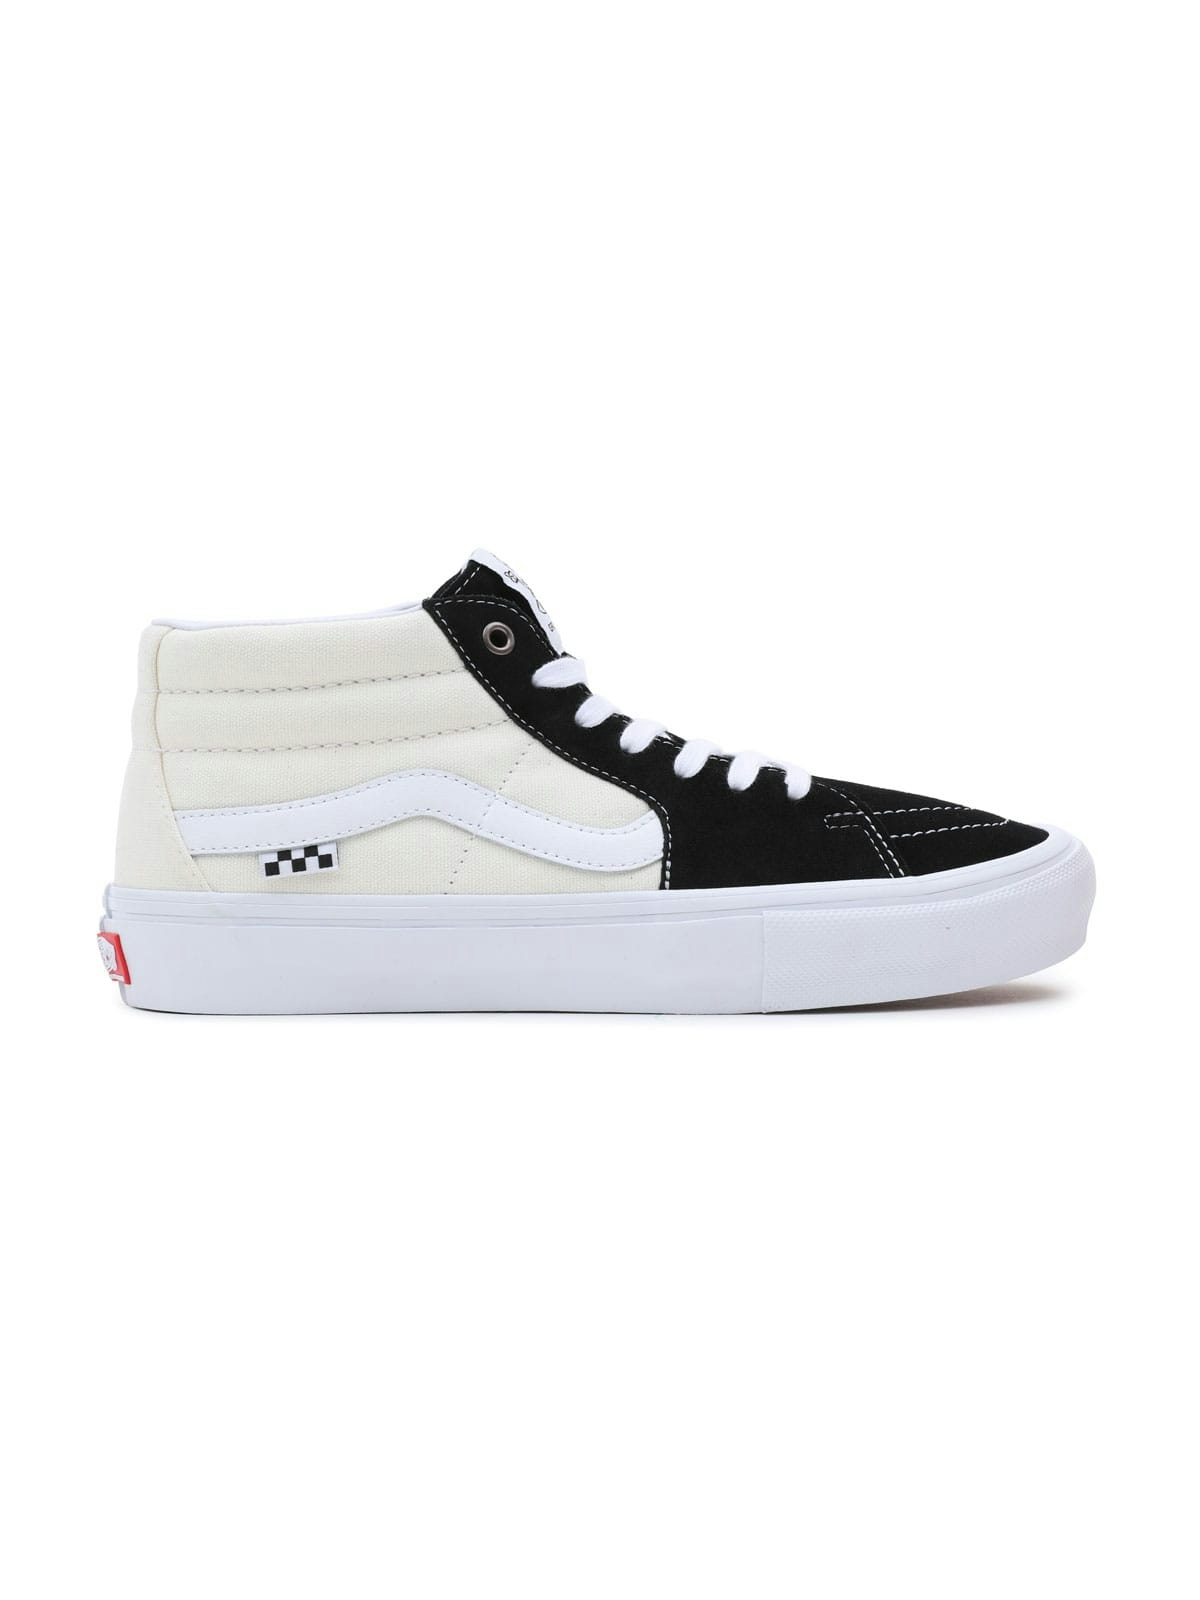 Vans Skate Grosso Mid Shoes Marshmallow/Black 2